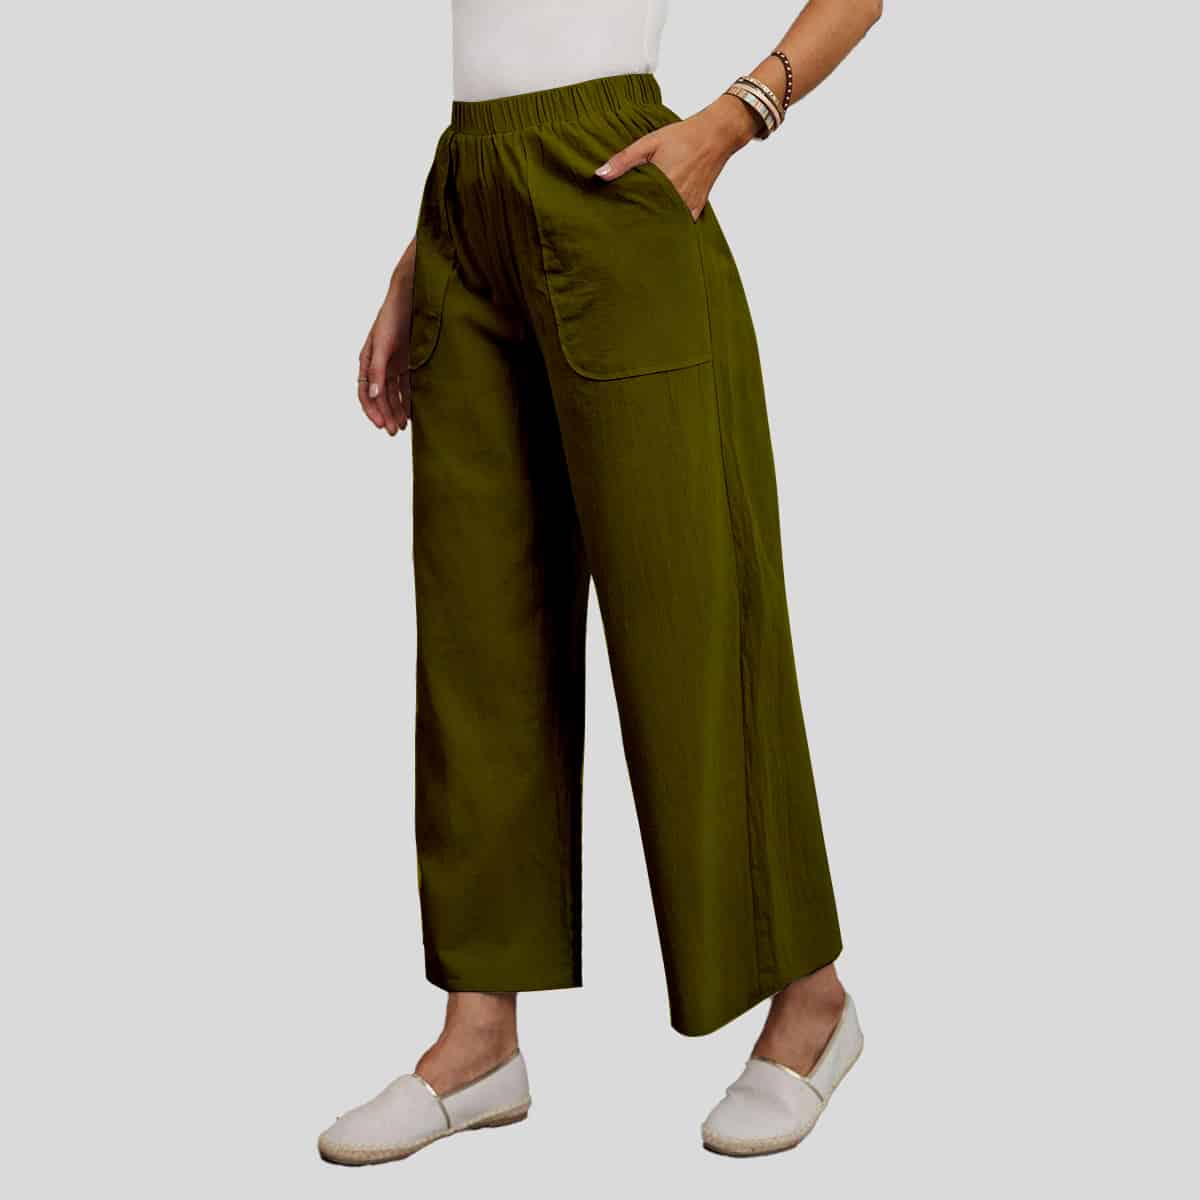 Fern Green Slant Pockets Wide Leg Pants-RCP016